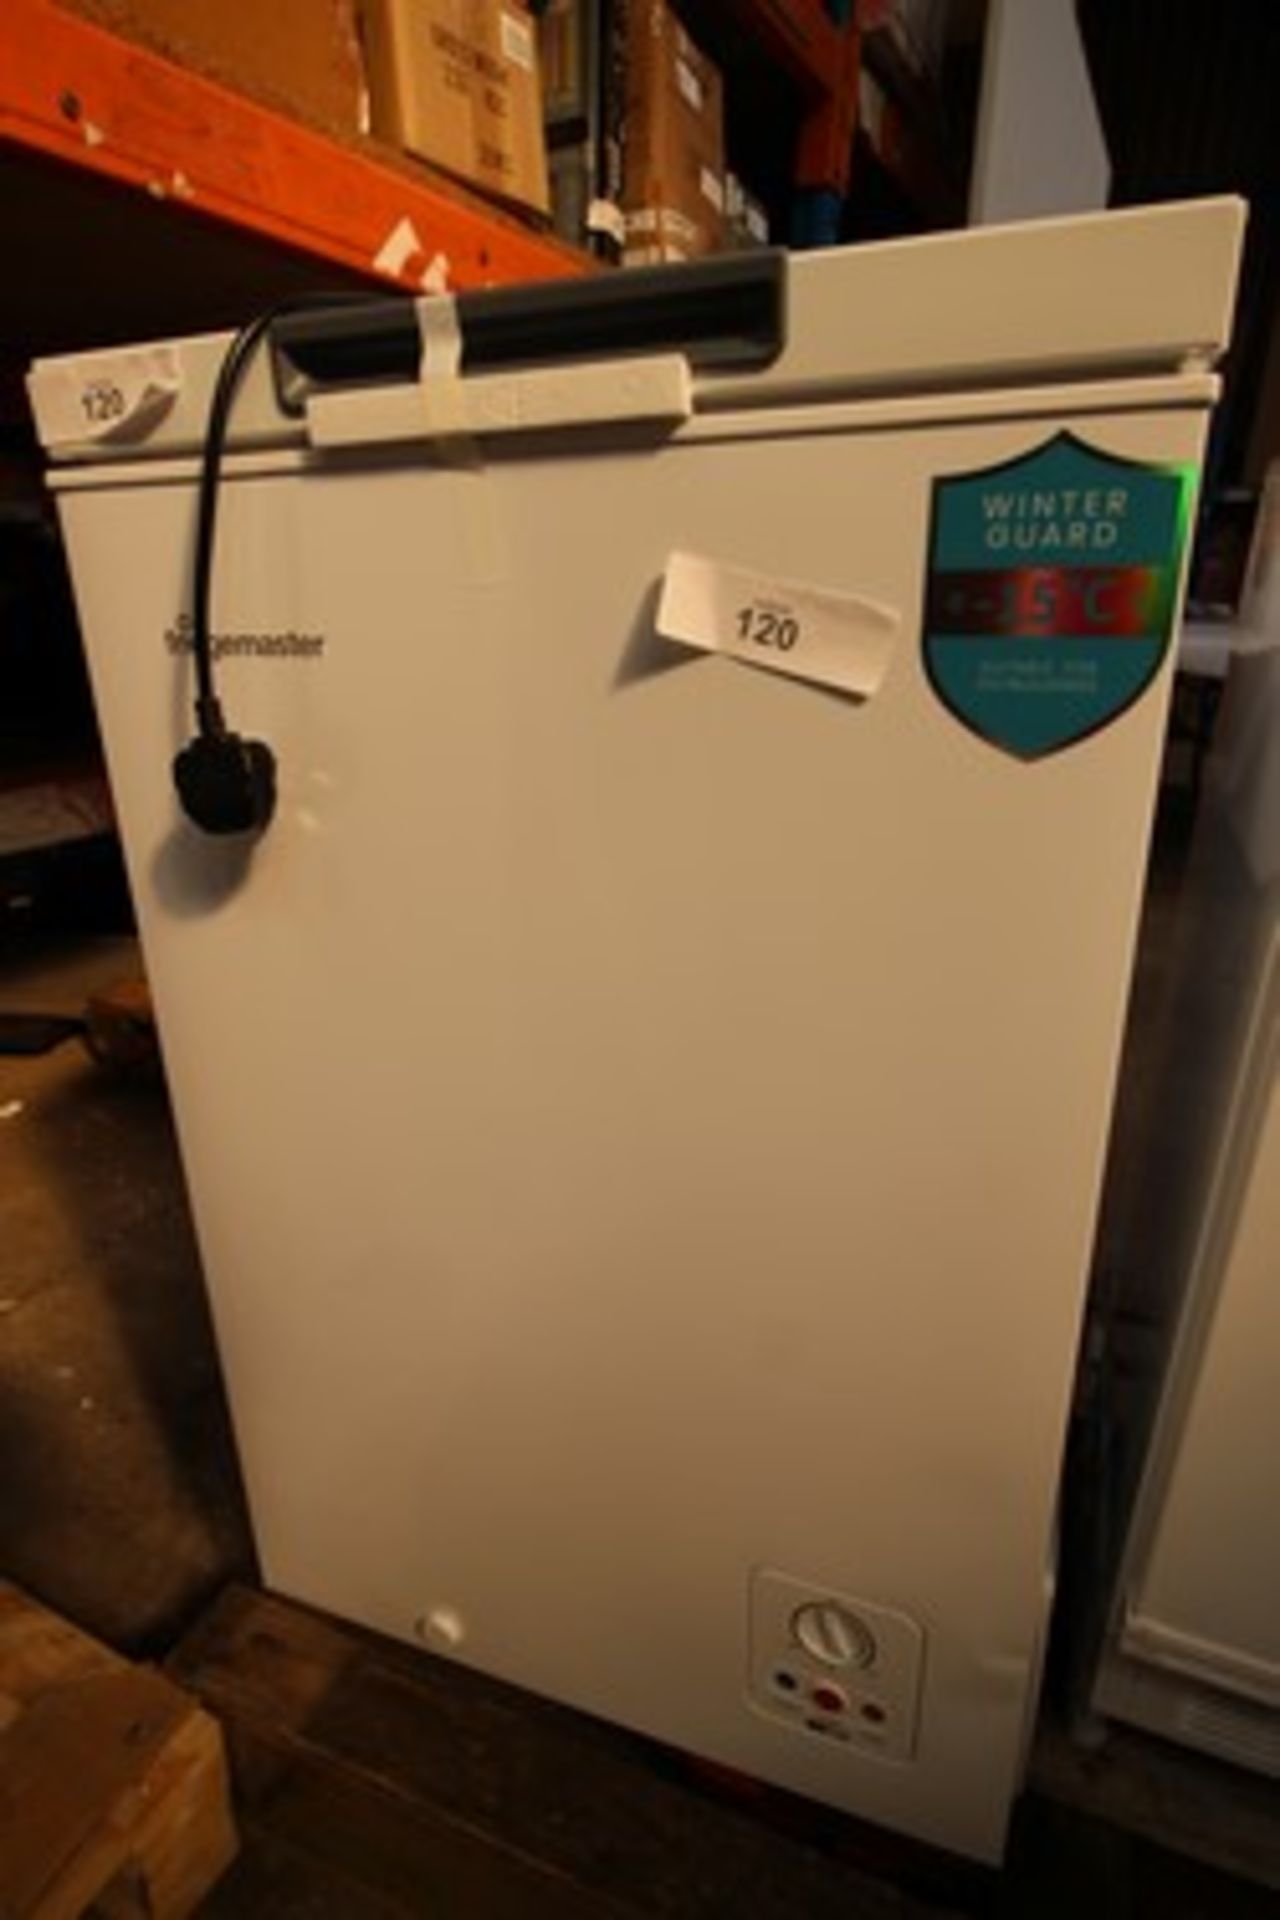 1 x Fridgmaster chest freezer, model No: MFC96E, small dent to front right panel - new (ebay floor)